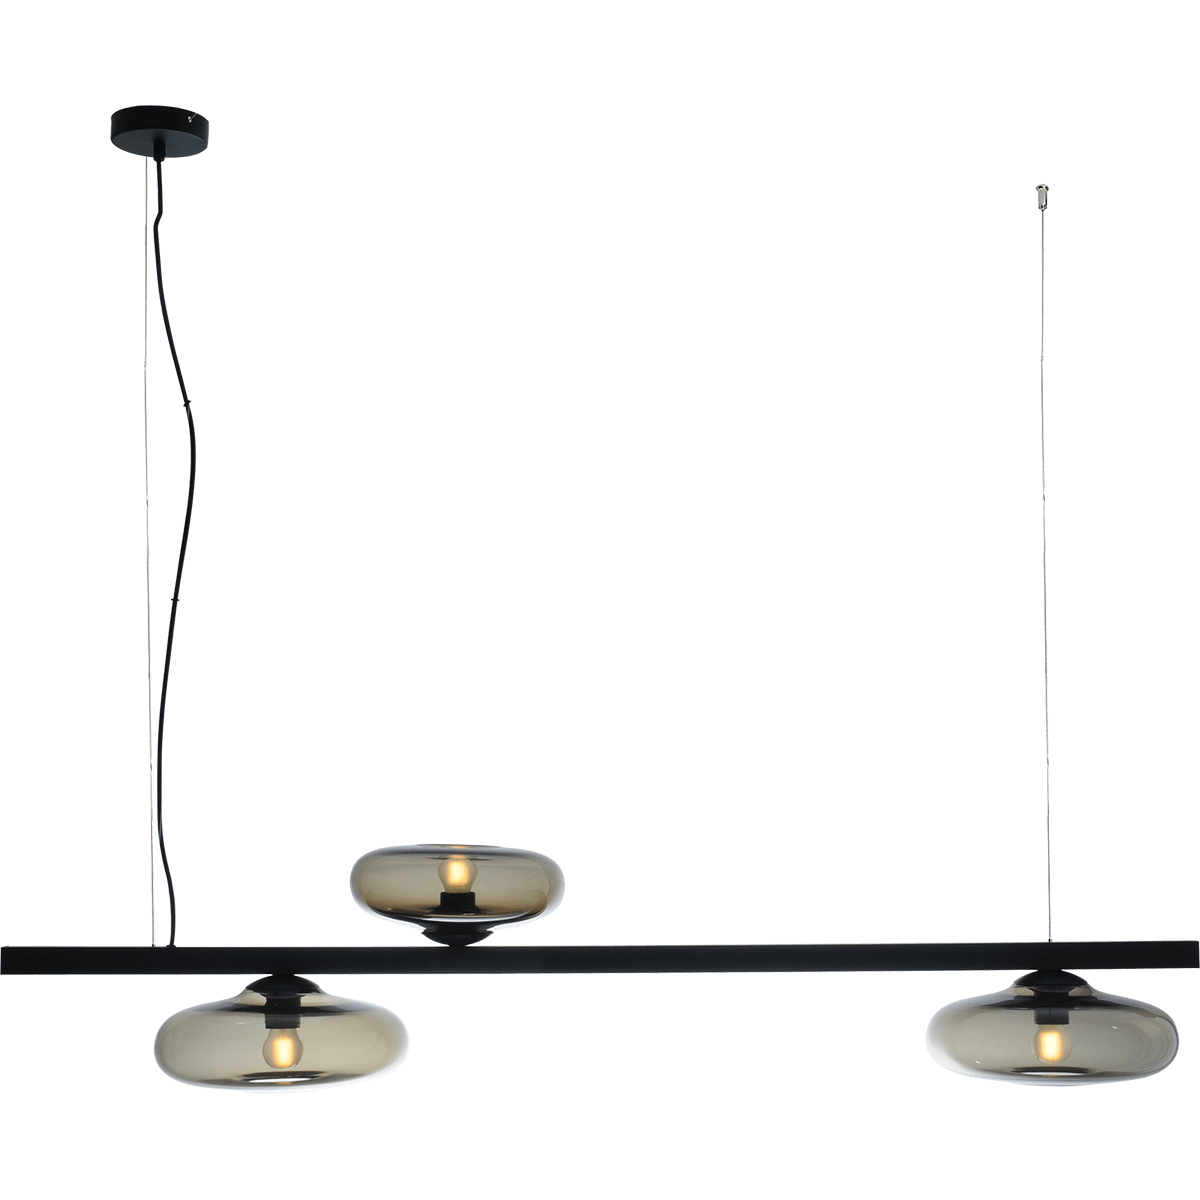 Hanglamp Hoseki 3-lichts zwart 130cm - 2x down 1x up - 2x glas smoke Ø28cm + 1x Ø23cm - stalen draad 150cm - MASTERLIGHT